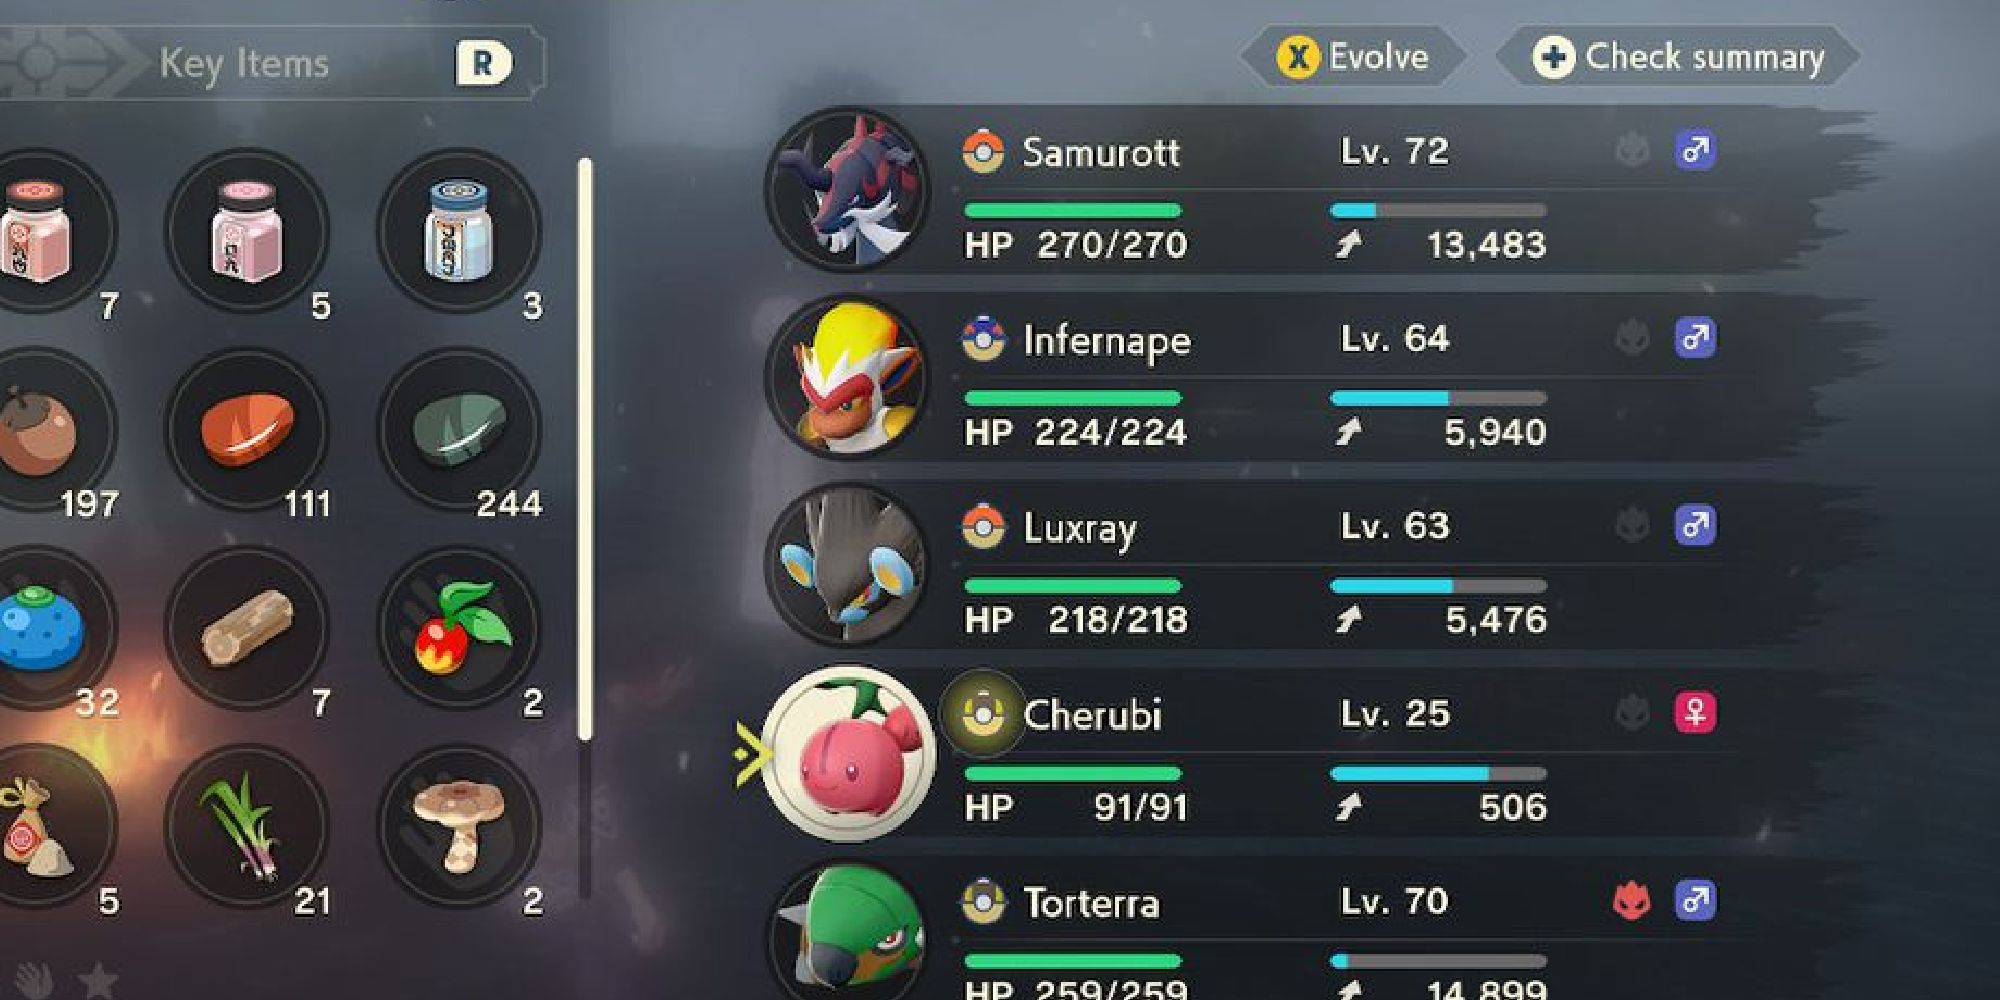 A player's Pokemon team consisting of Samurott, Infernape, Luxray, Cherubi, and Torterra, with Cherubi ready to evolve